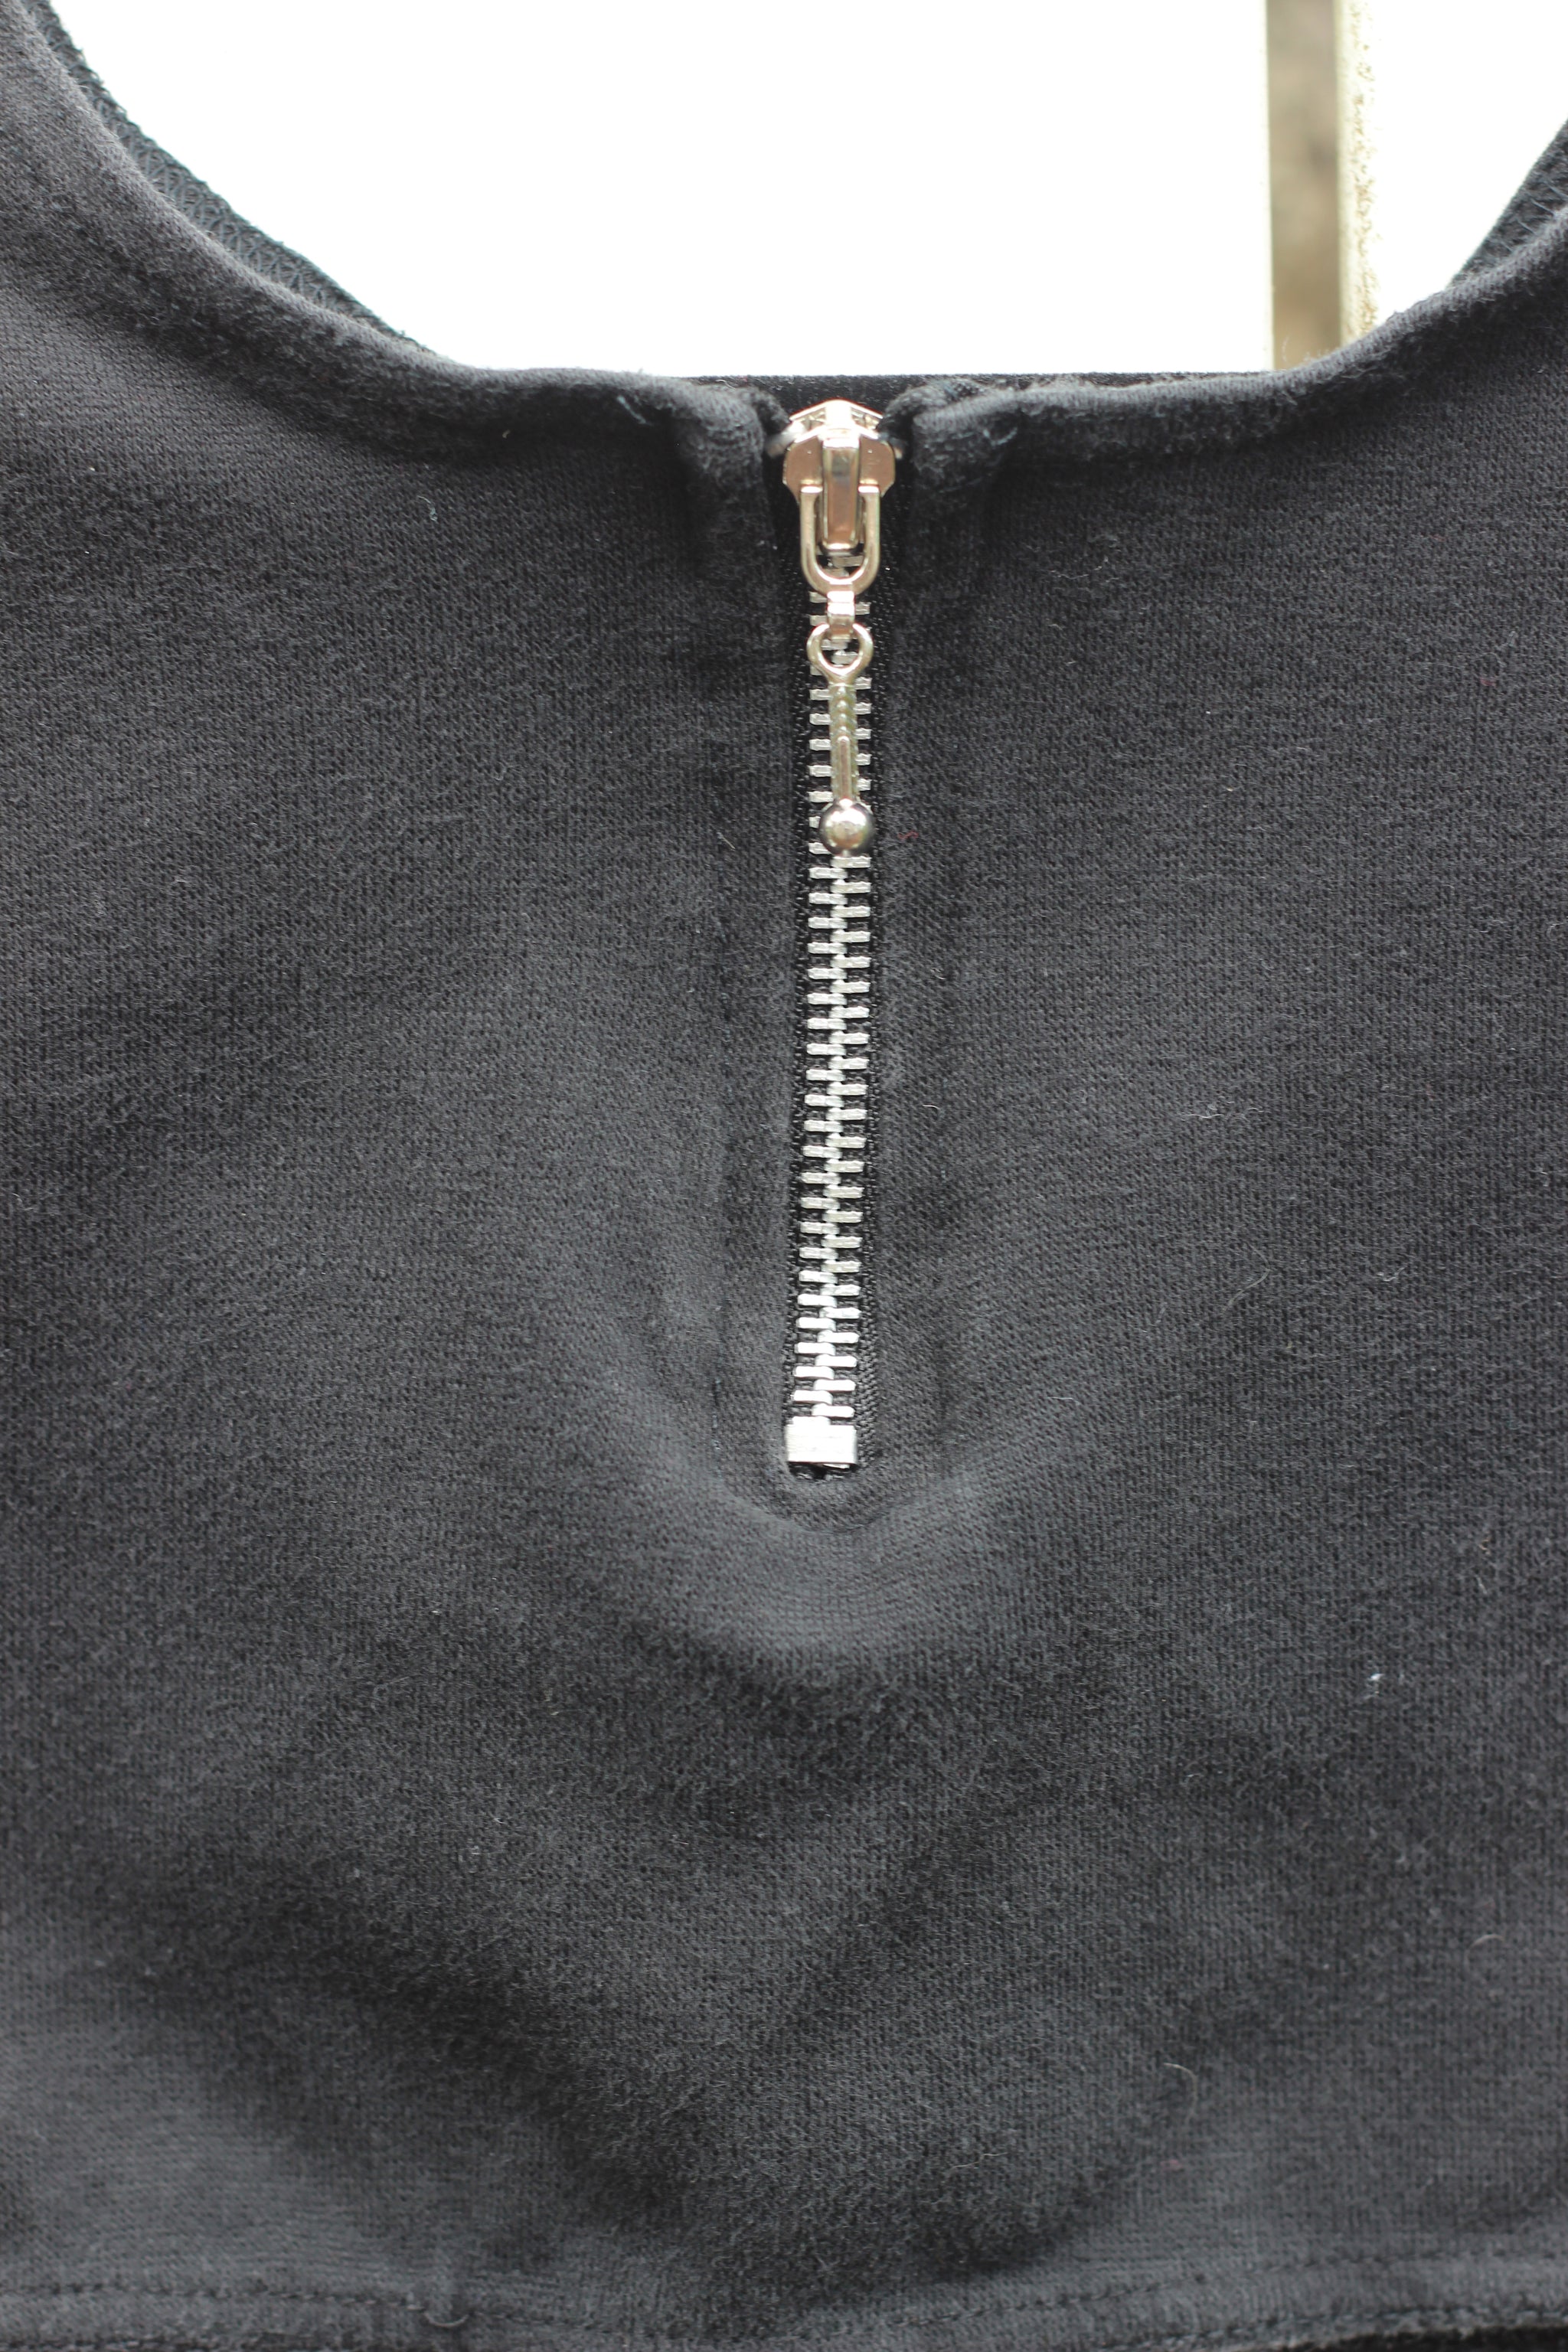 90's Zipper Cropped Top (XS/S)